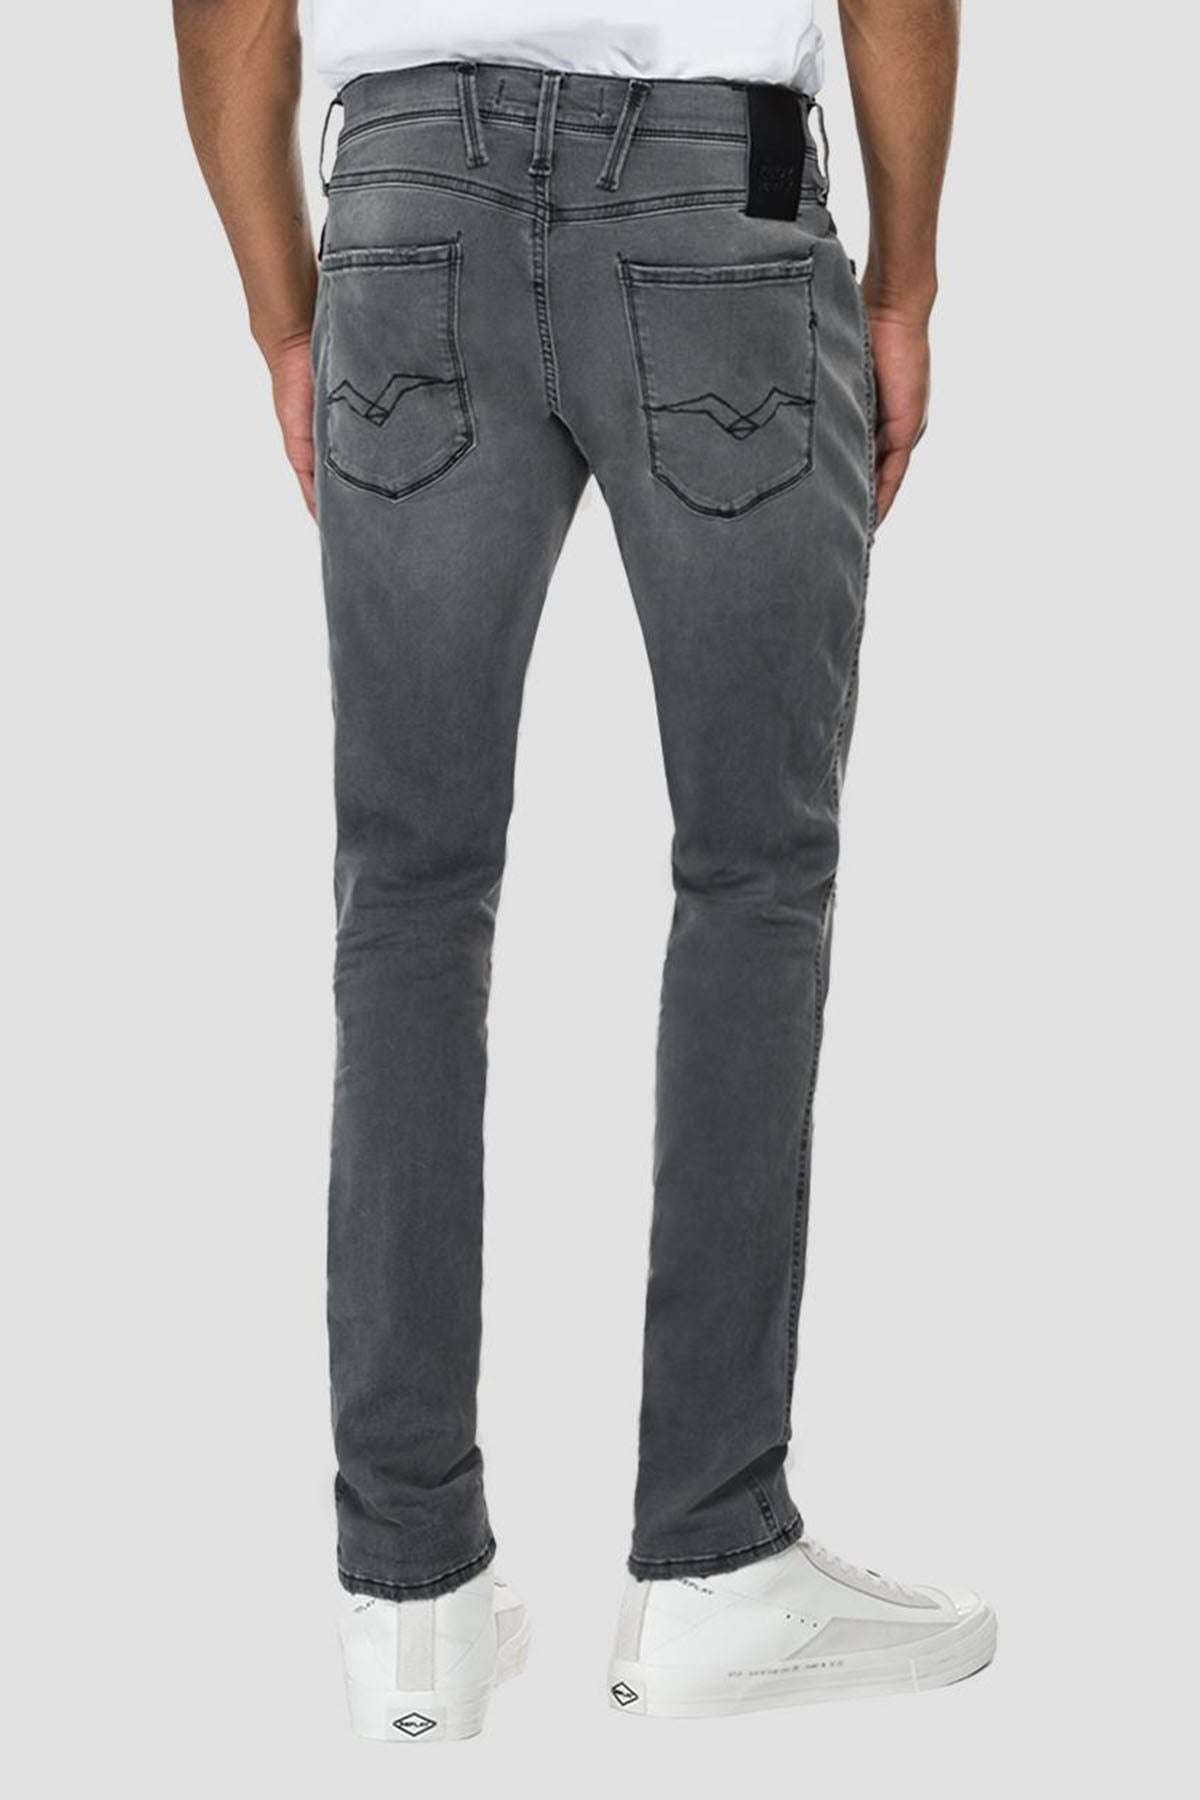 Replay Hyperflex X-Lite Re-Used Anbass Slim Fit Jeans-Libas Trendy Fashion Store